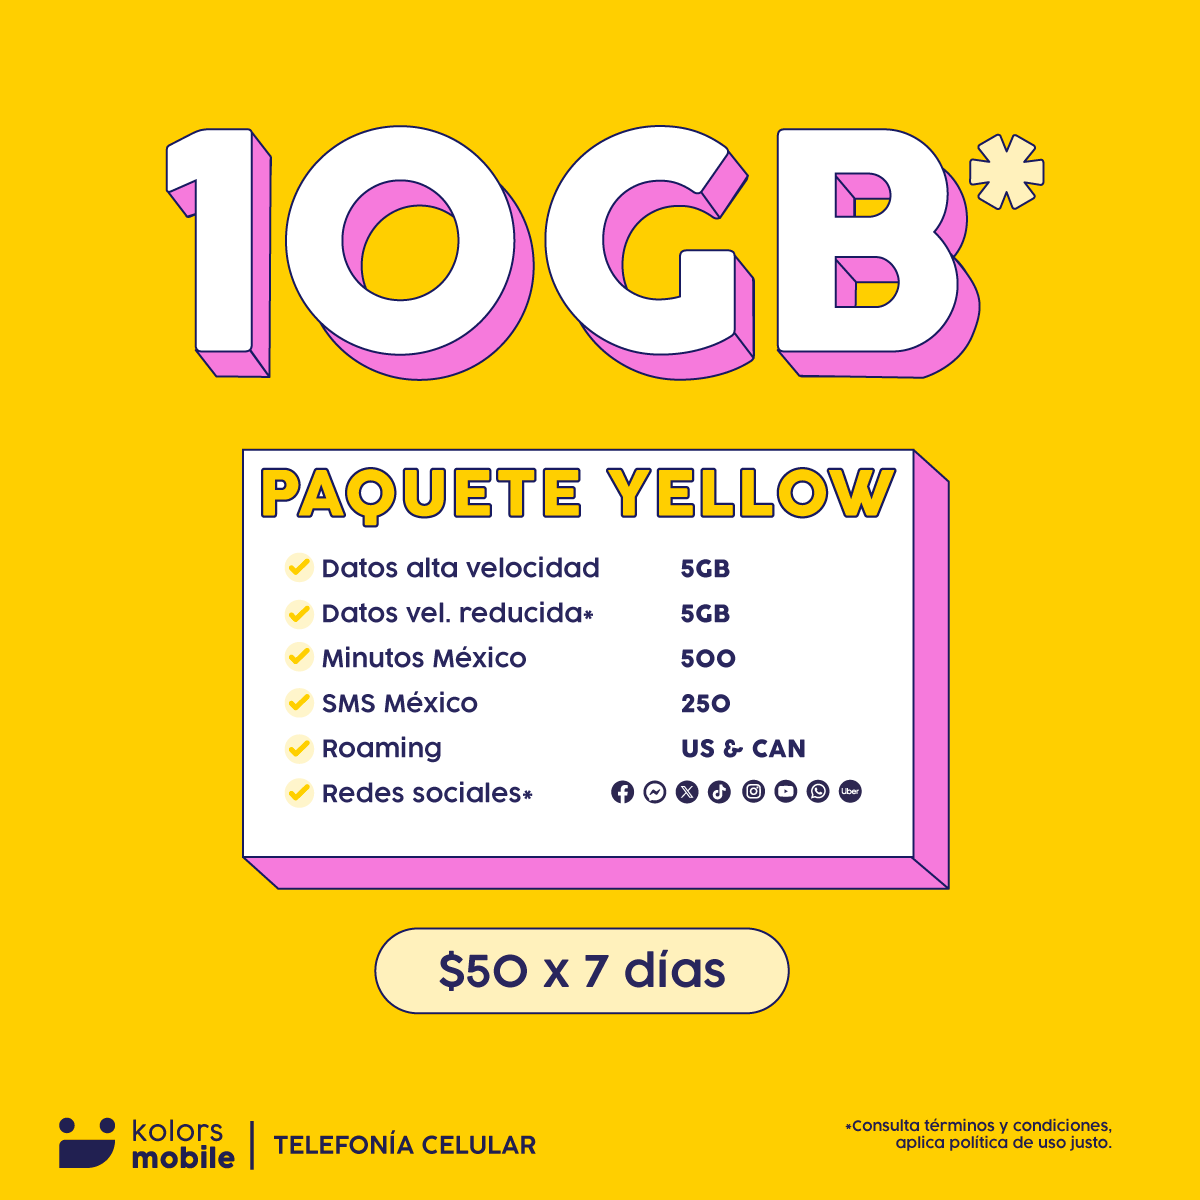 5. Paquete Yellow + SIM